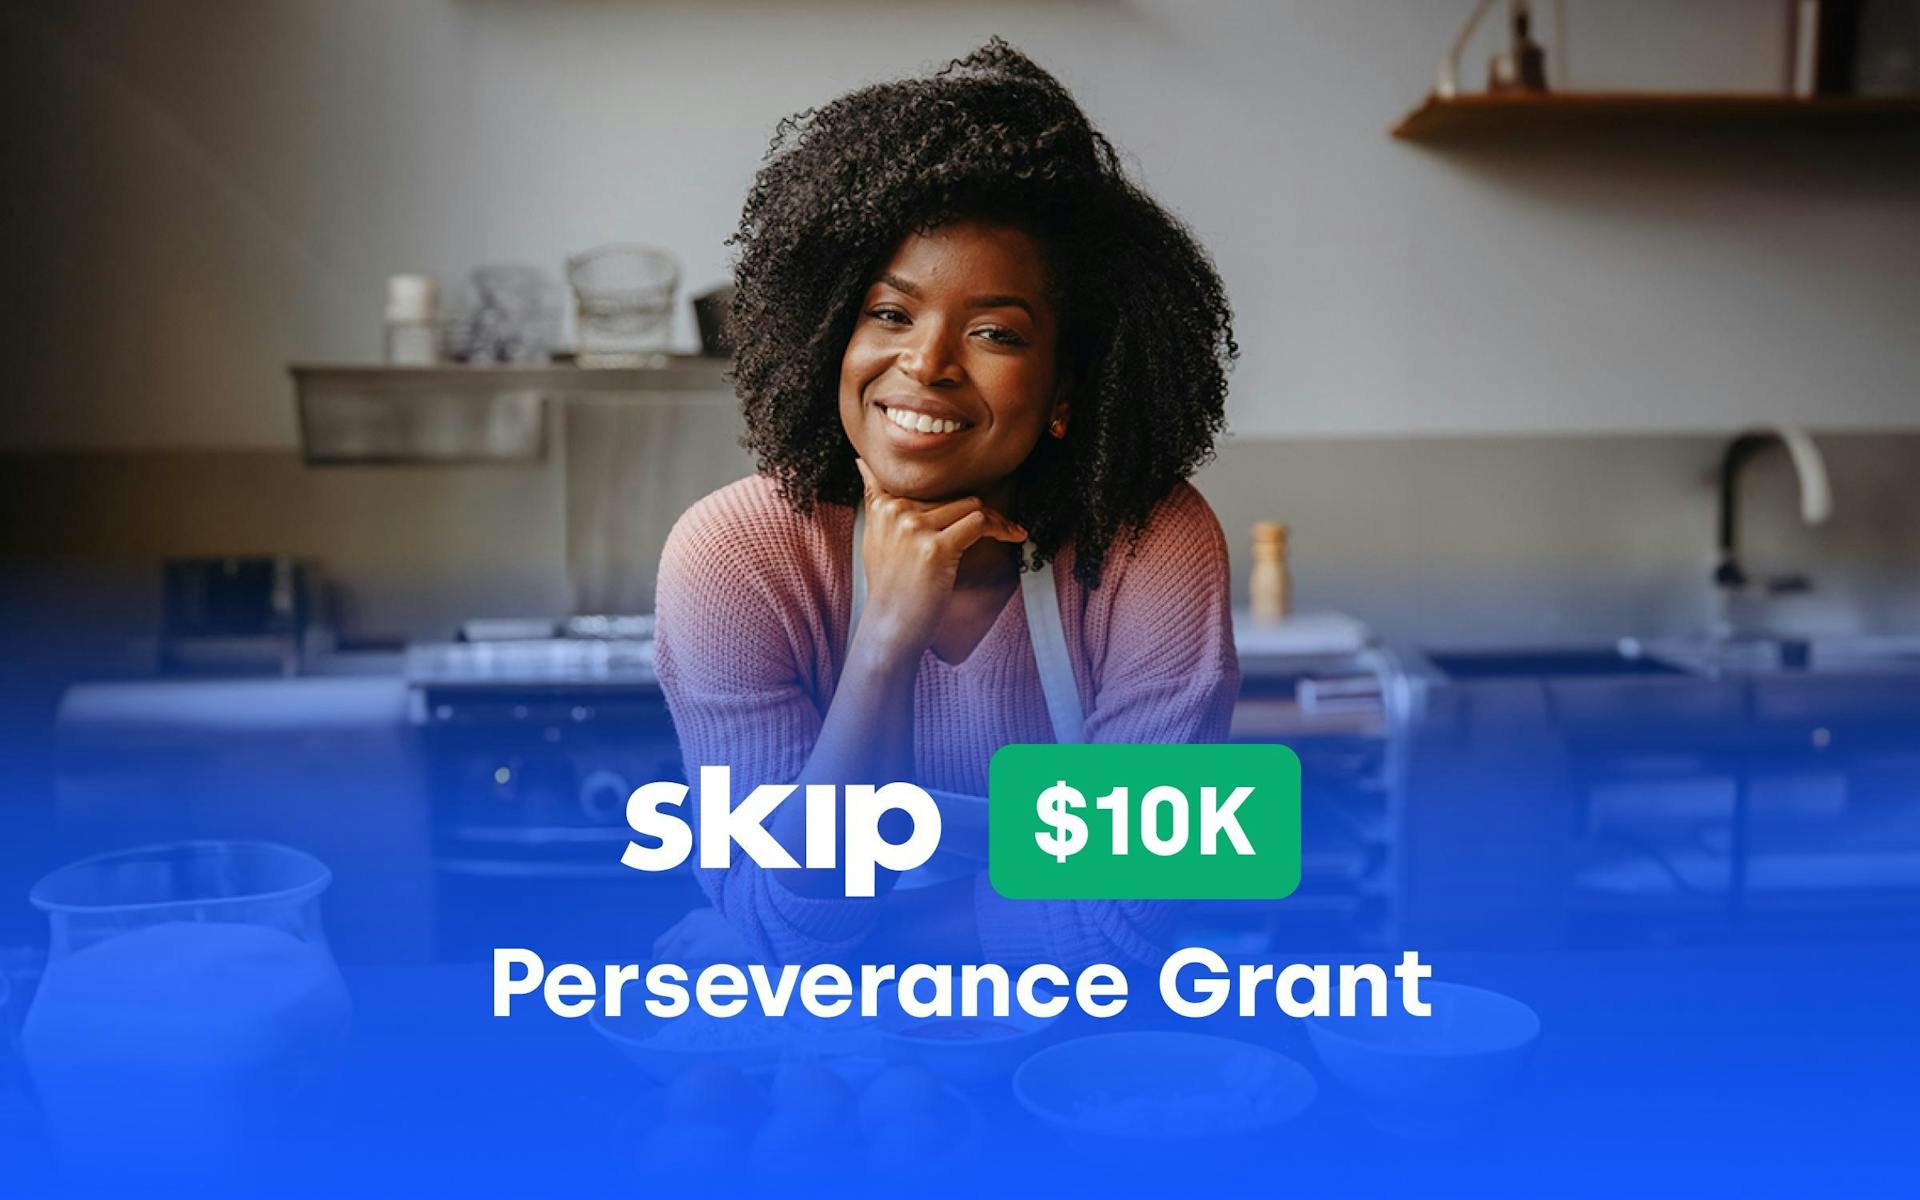 The Skip $10k Perseverance Grant Image